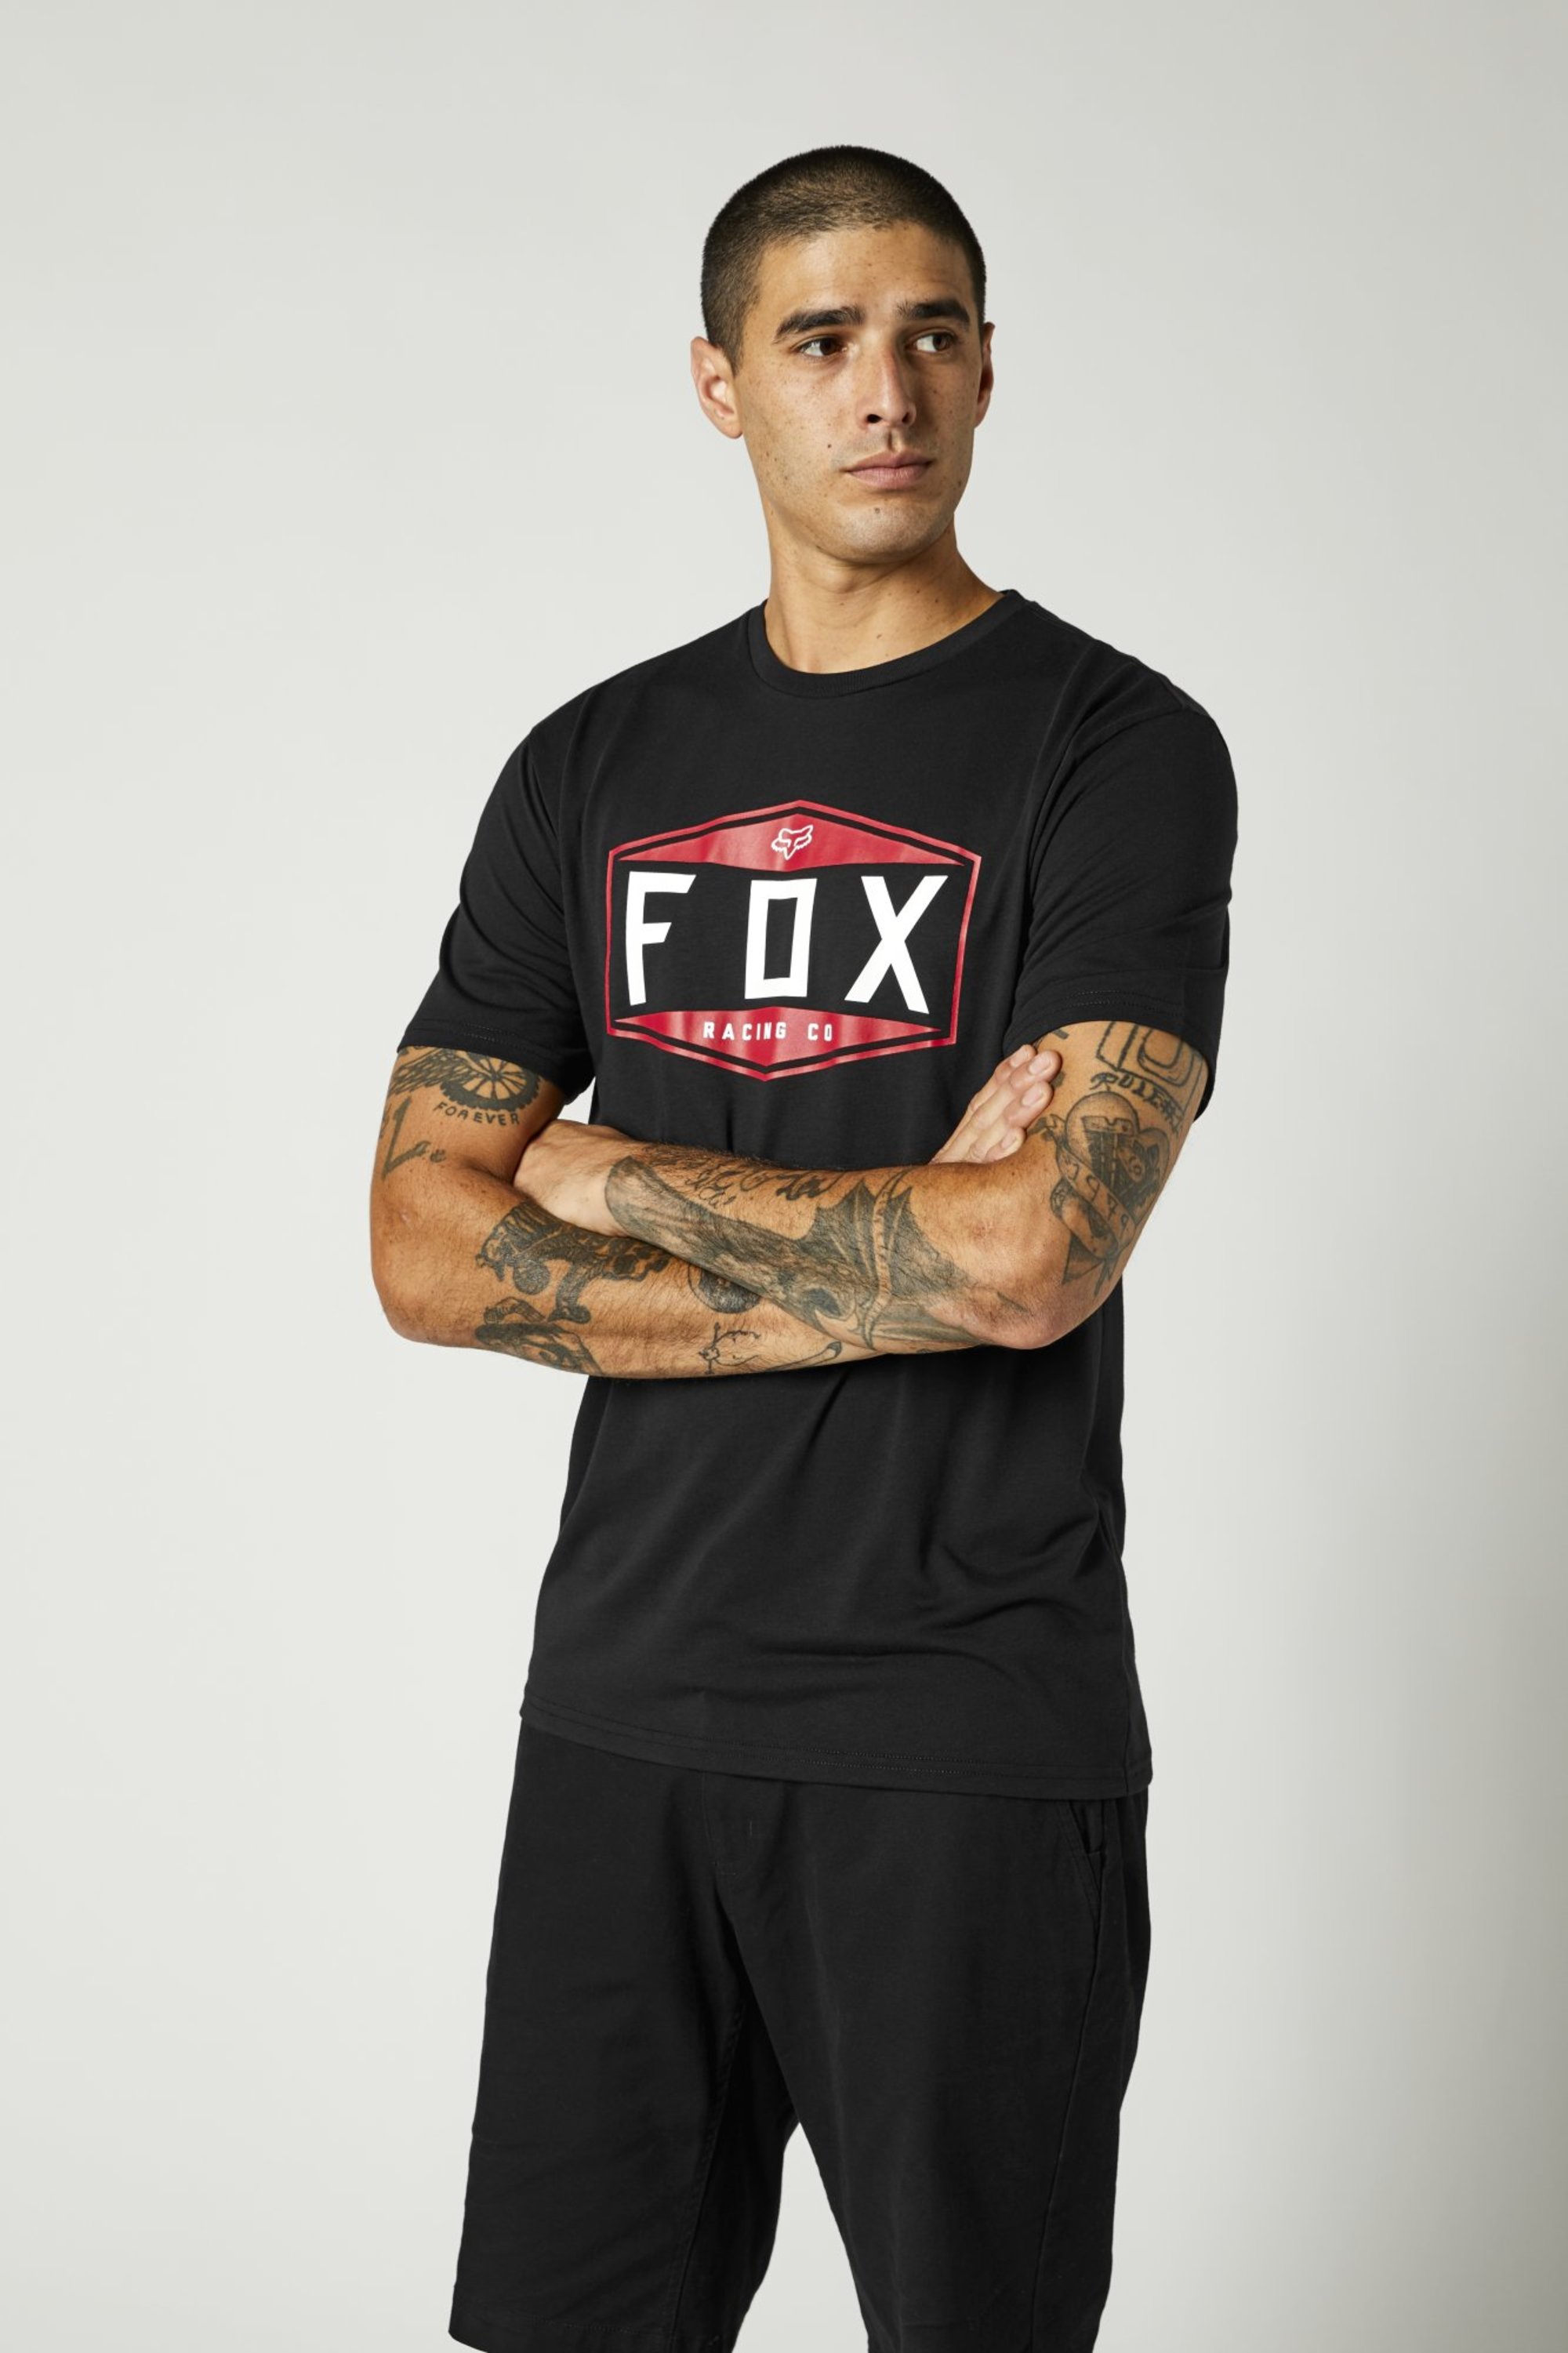 fox racing t-shirt shirts for men emblem tech